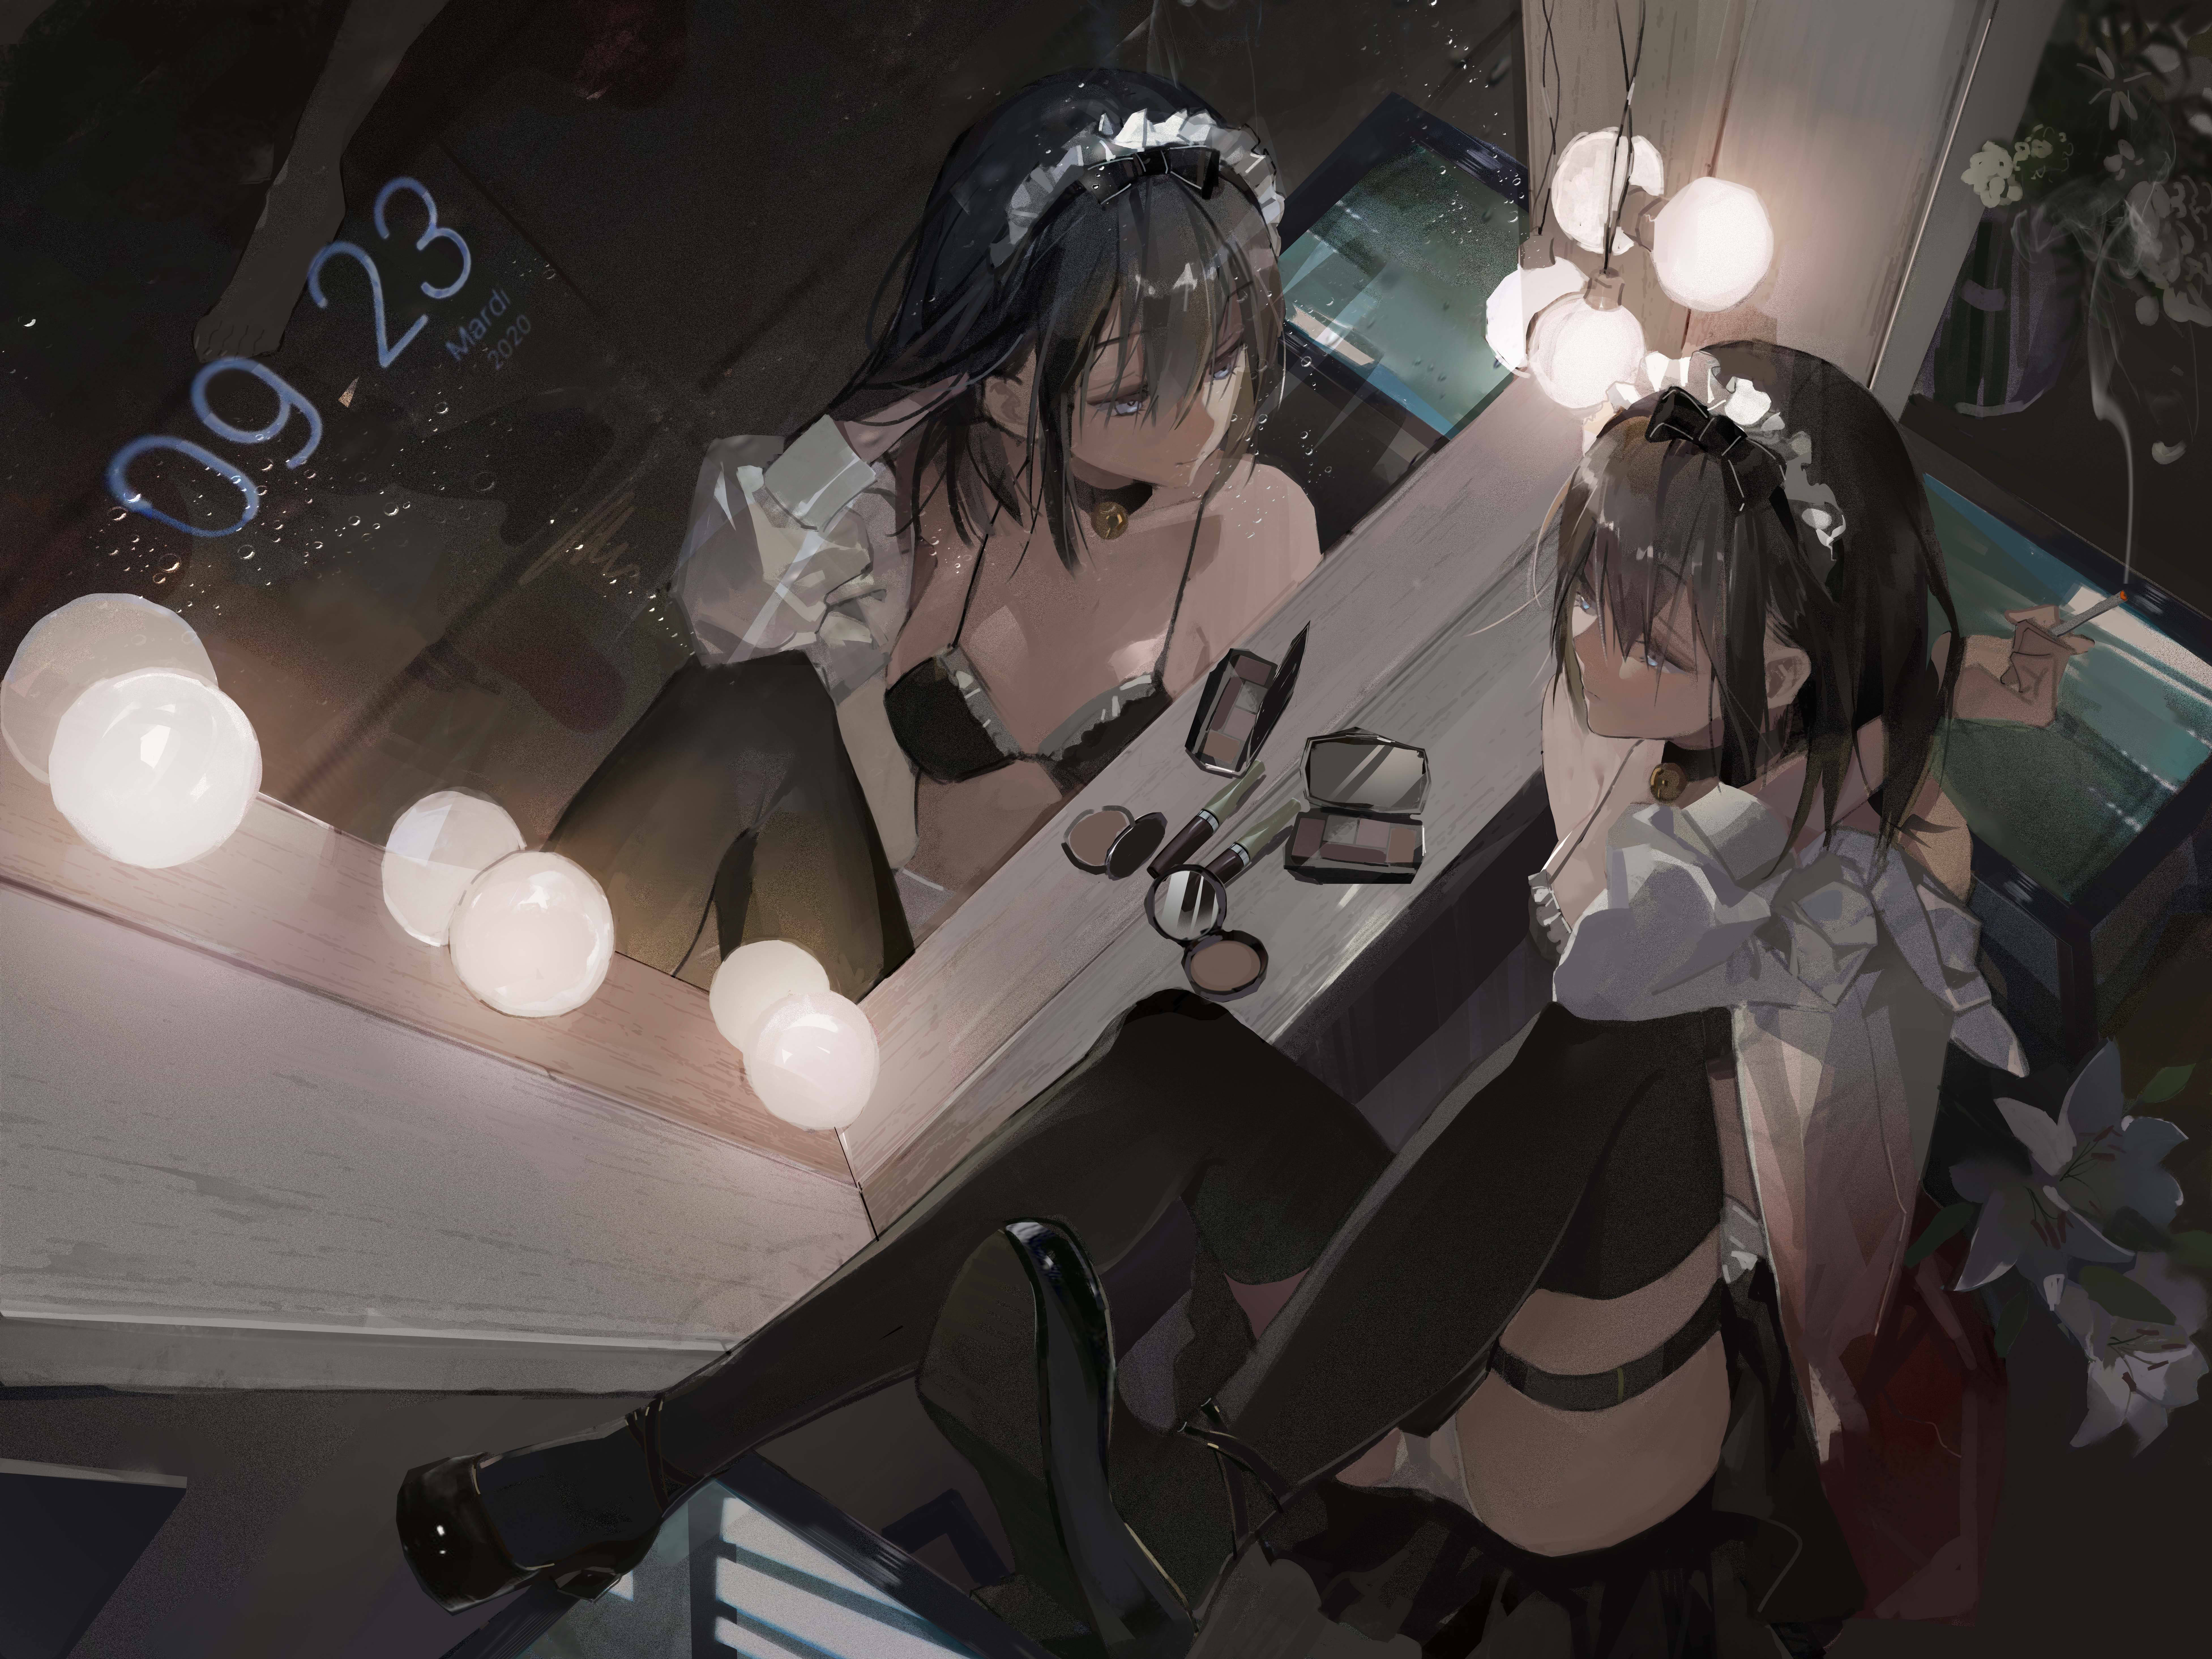 Anime 7813x5860 anime anime girls digital art artwork 2D Songruan smoking mirror reflection high angle dark hair time maid outfit bikini maid bikini open shirt thigh-highs legs up